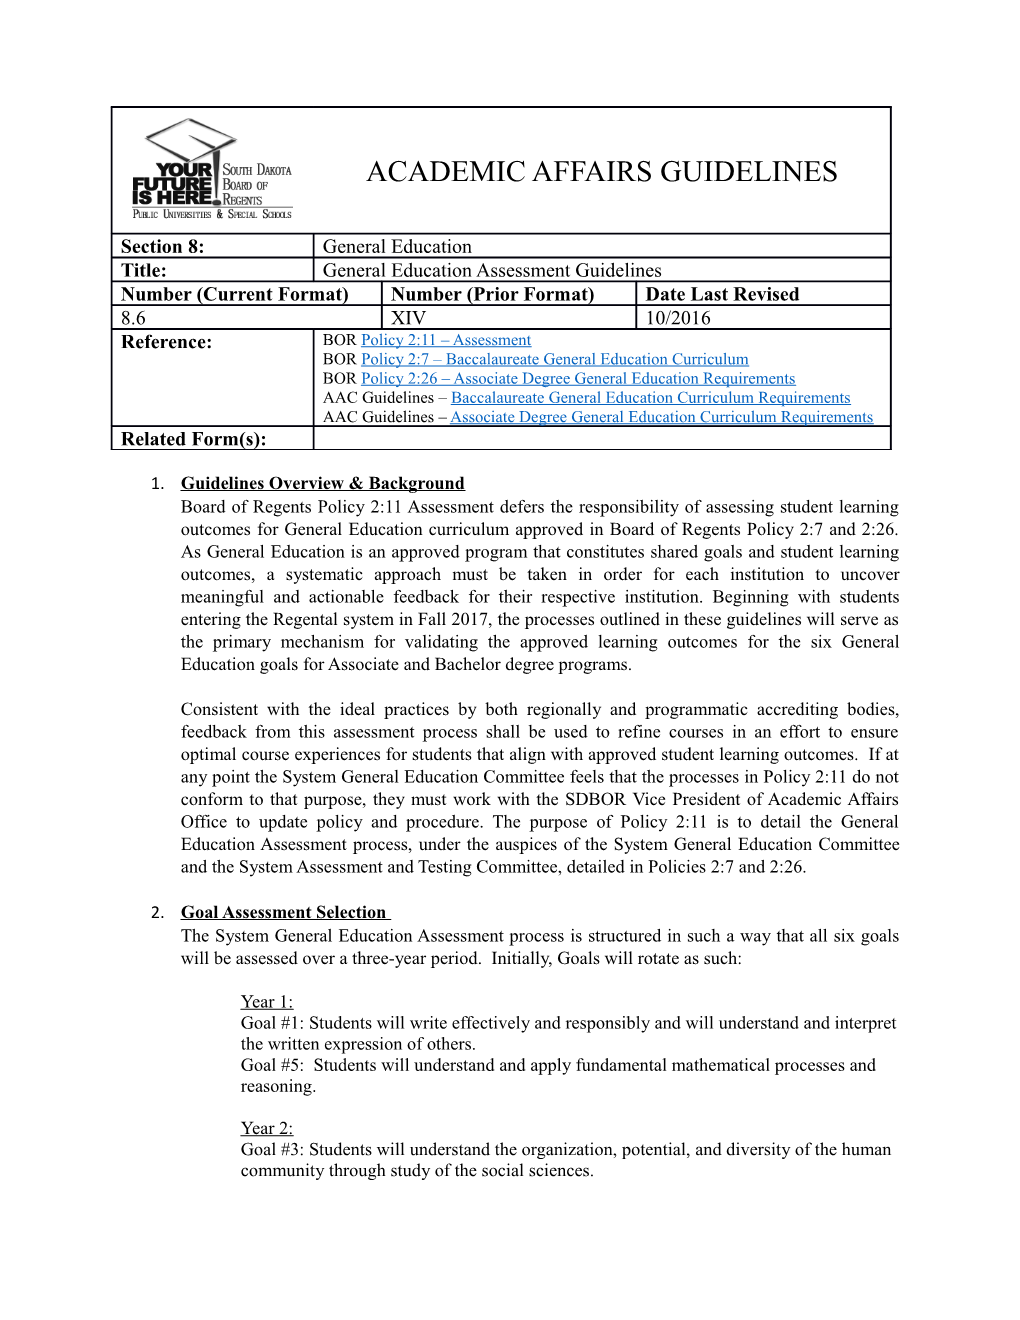 Academic Affairs Council